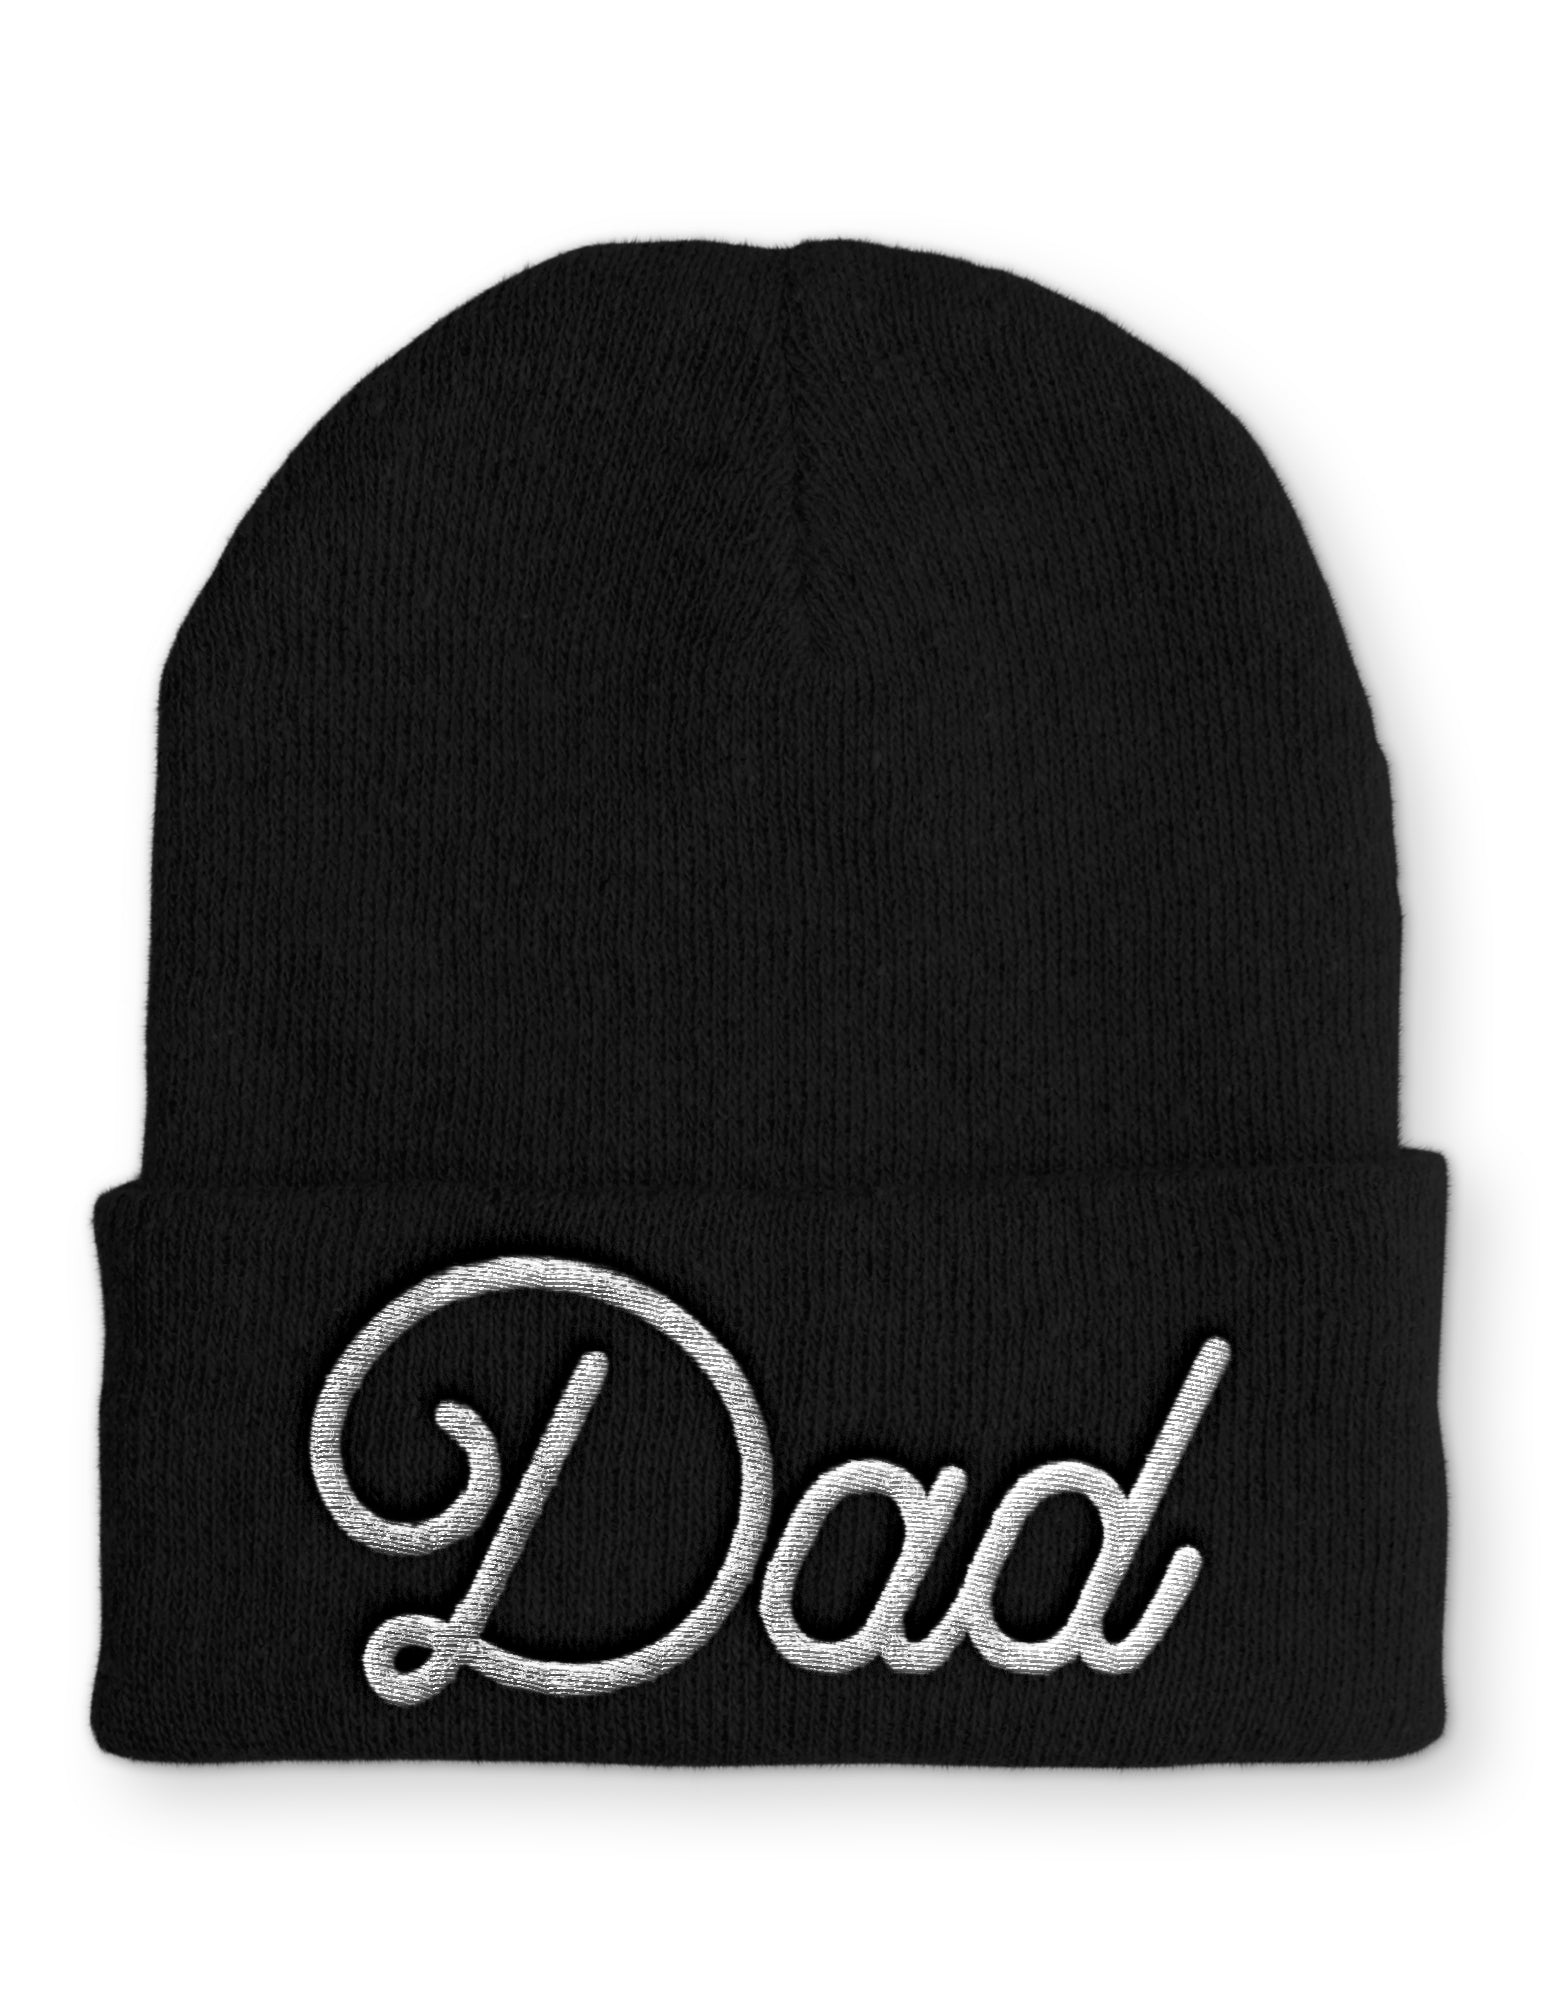 Mütze Mom & Dad Duo